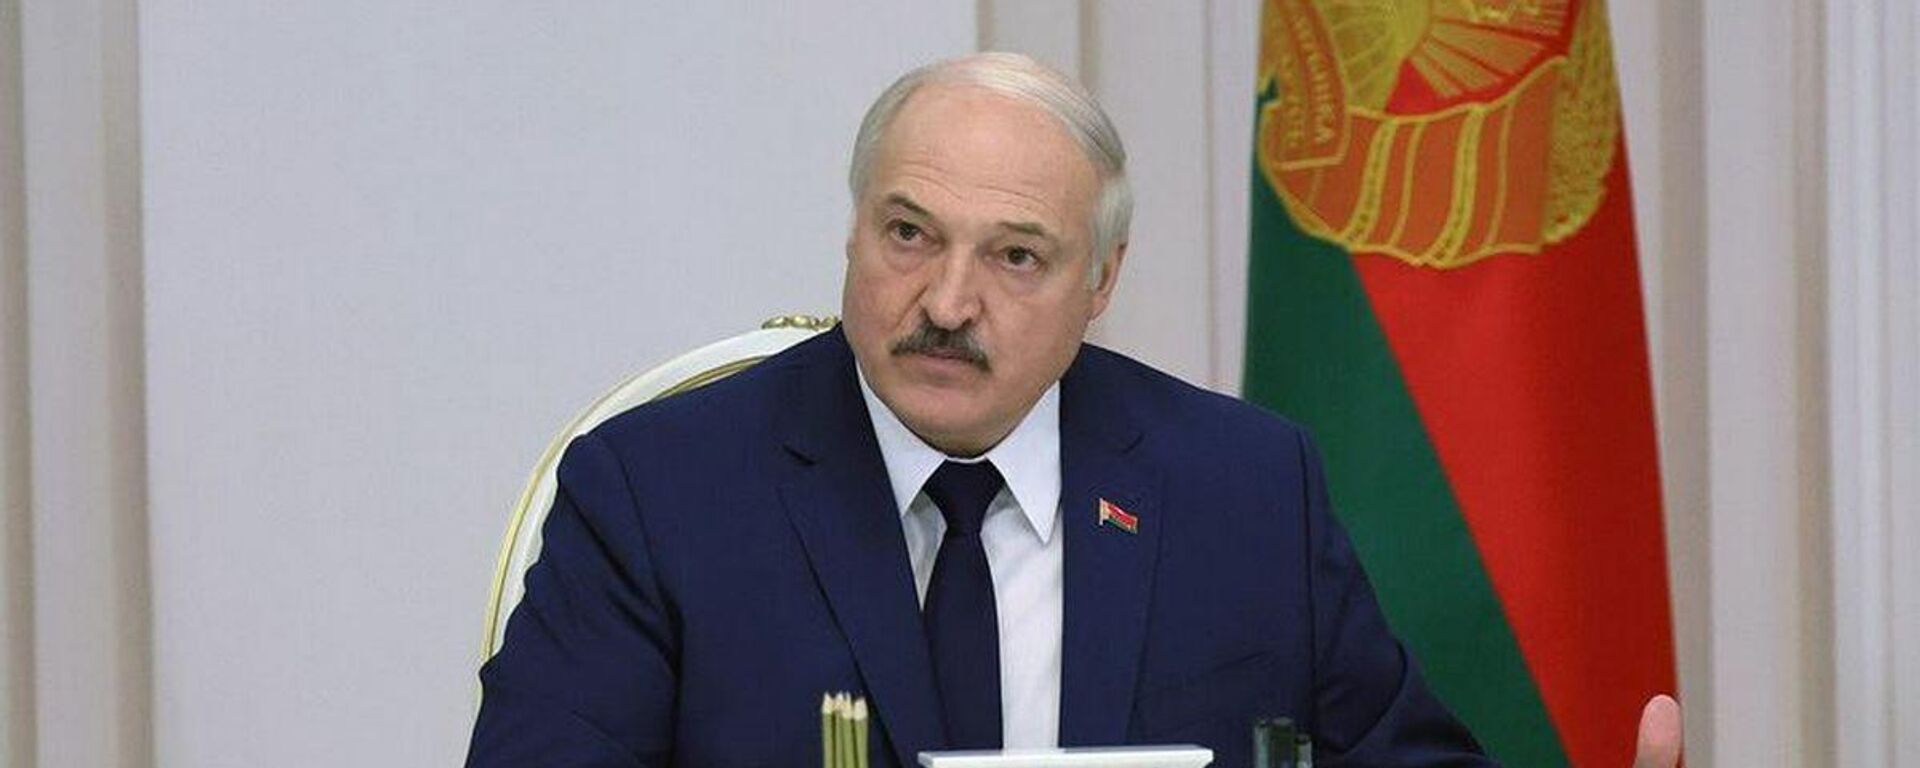 Президент Беларуси Александр Лукашенко  - Sputnik Беларусь, 1920, 02.12.2021